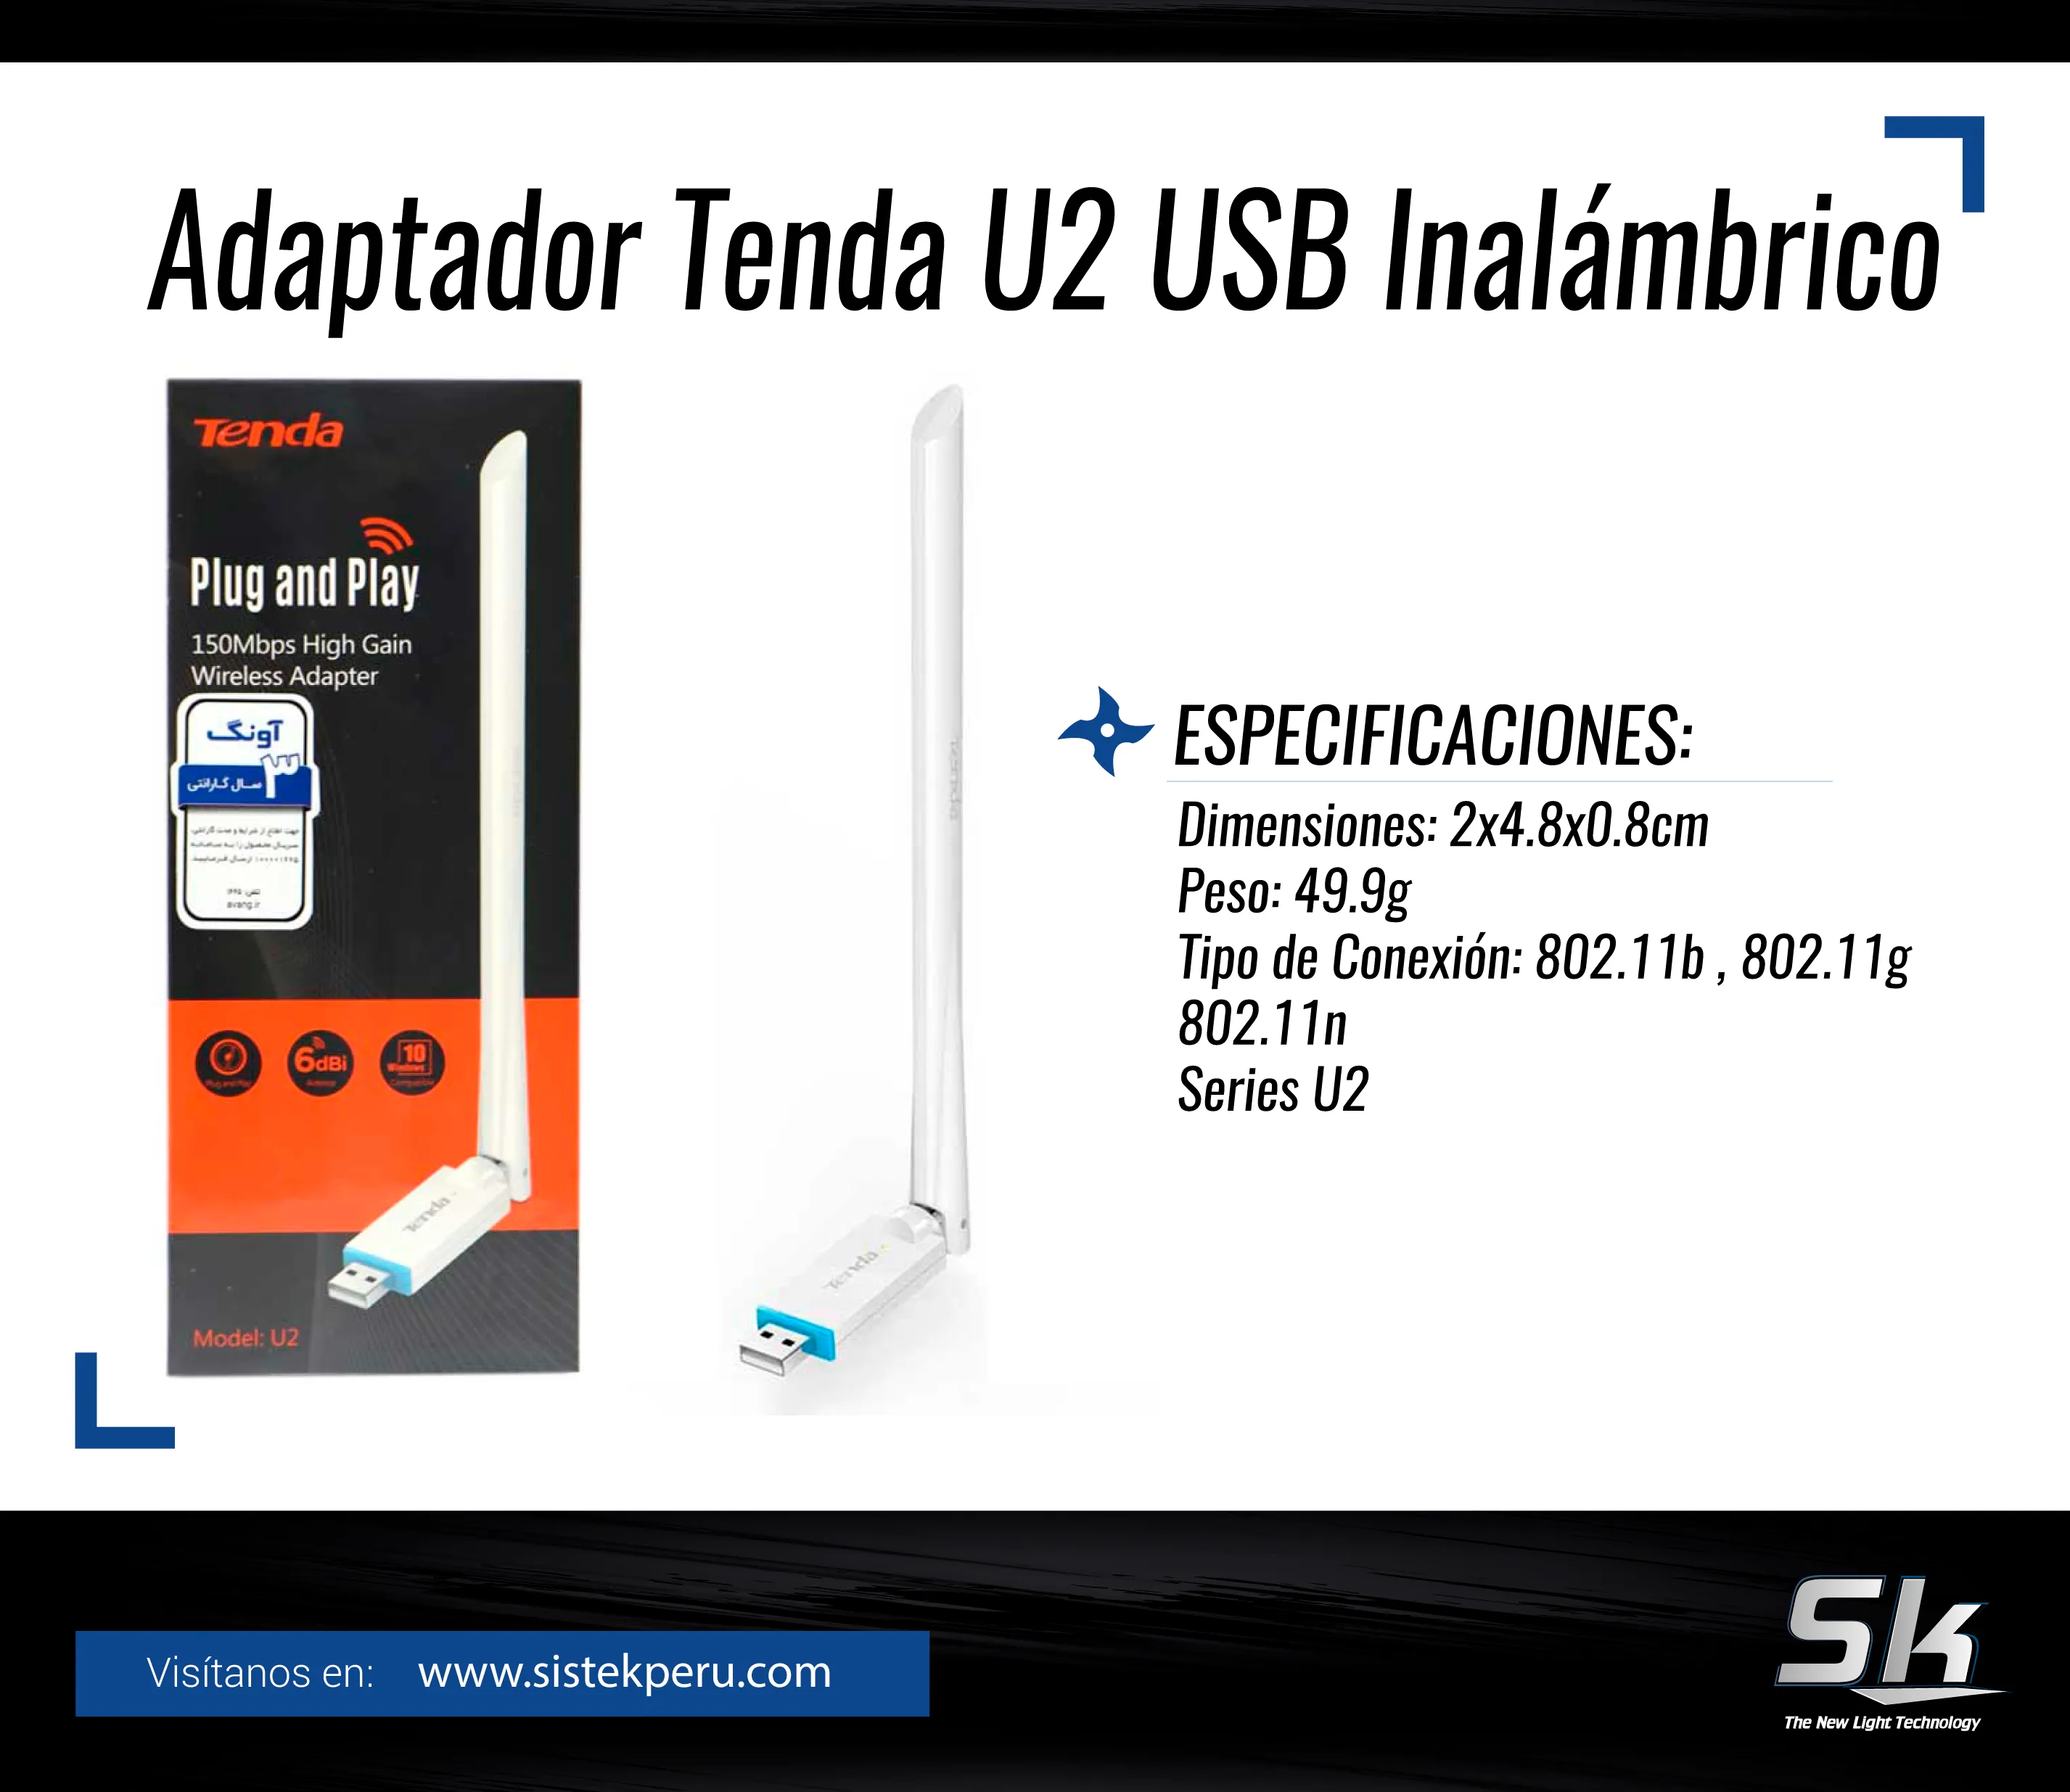 Adaptador Inalambrico USB Tenda U2